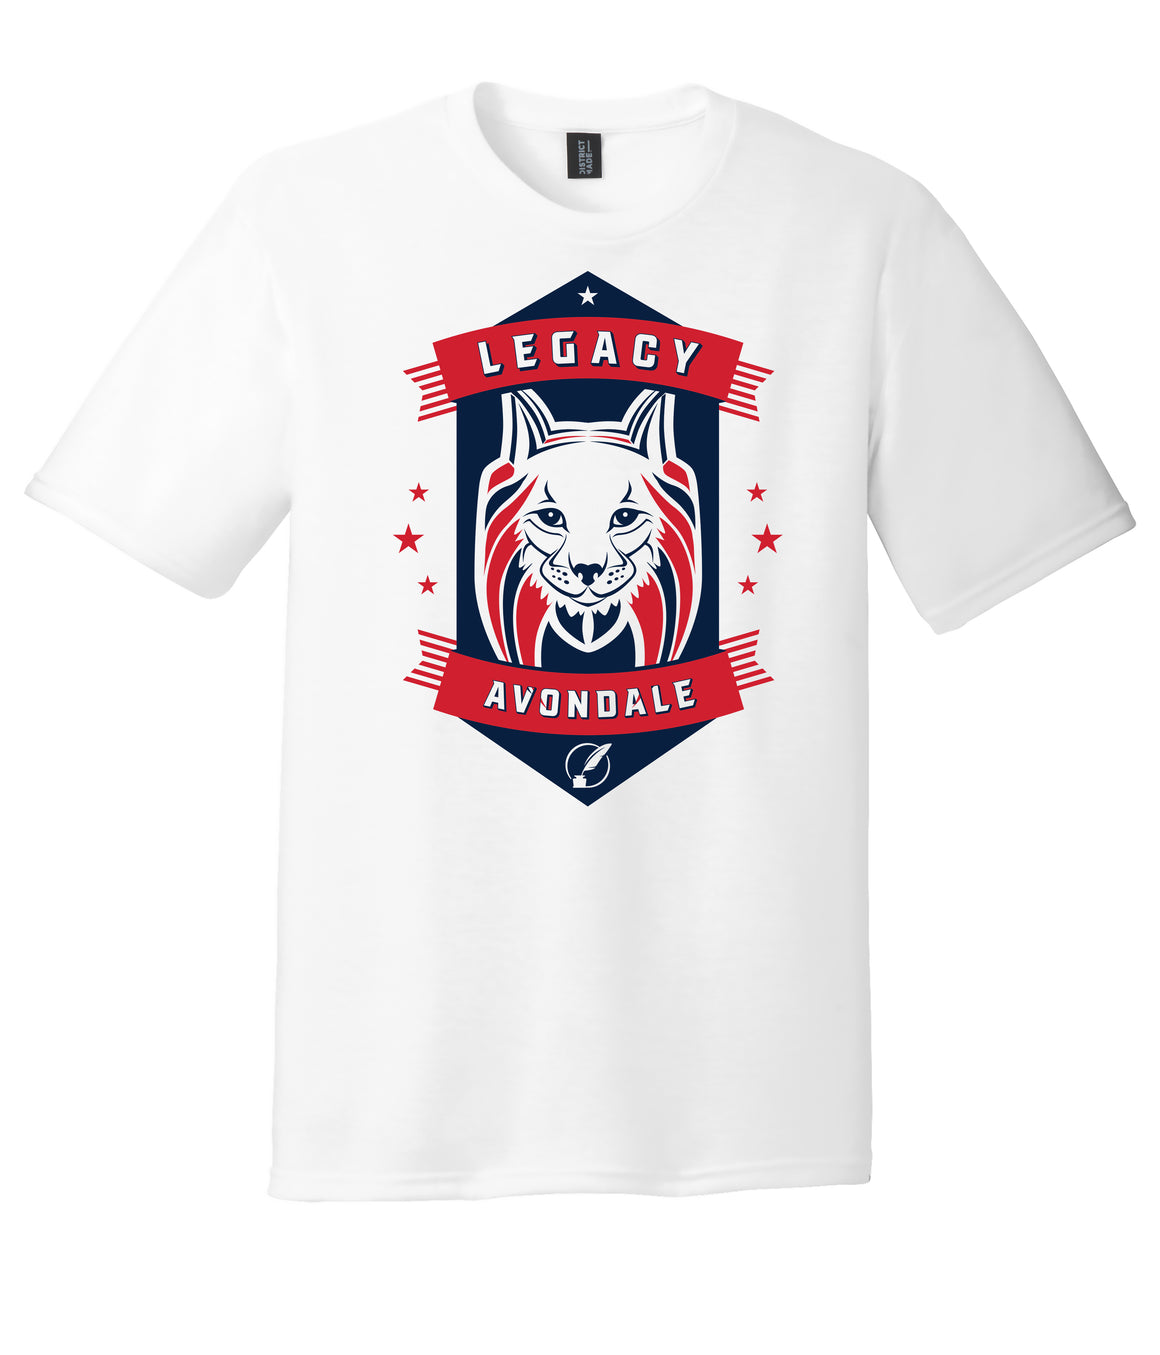 Legacy Traditional School Avondale - White Spirit Day Shirt w/Mascot